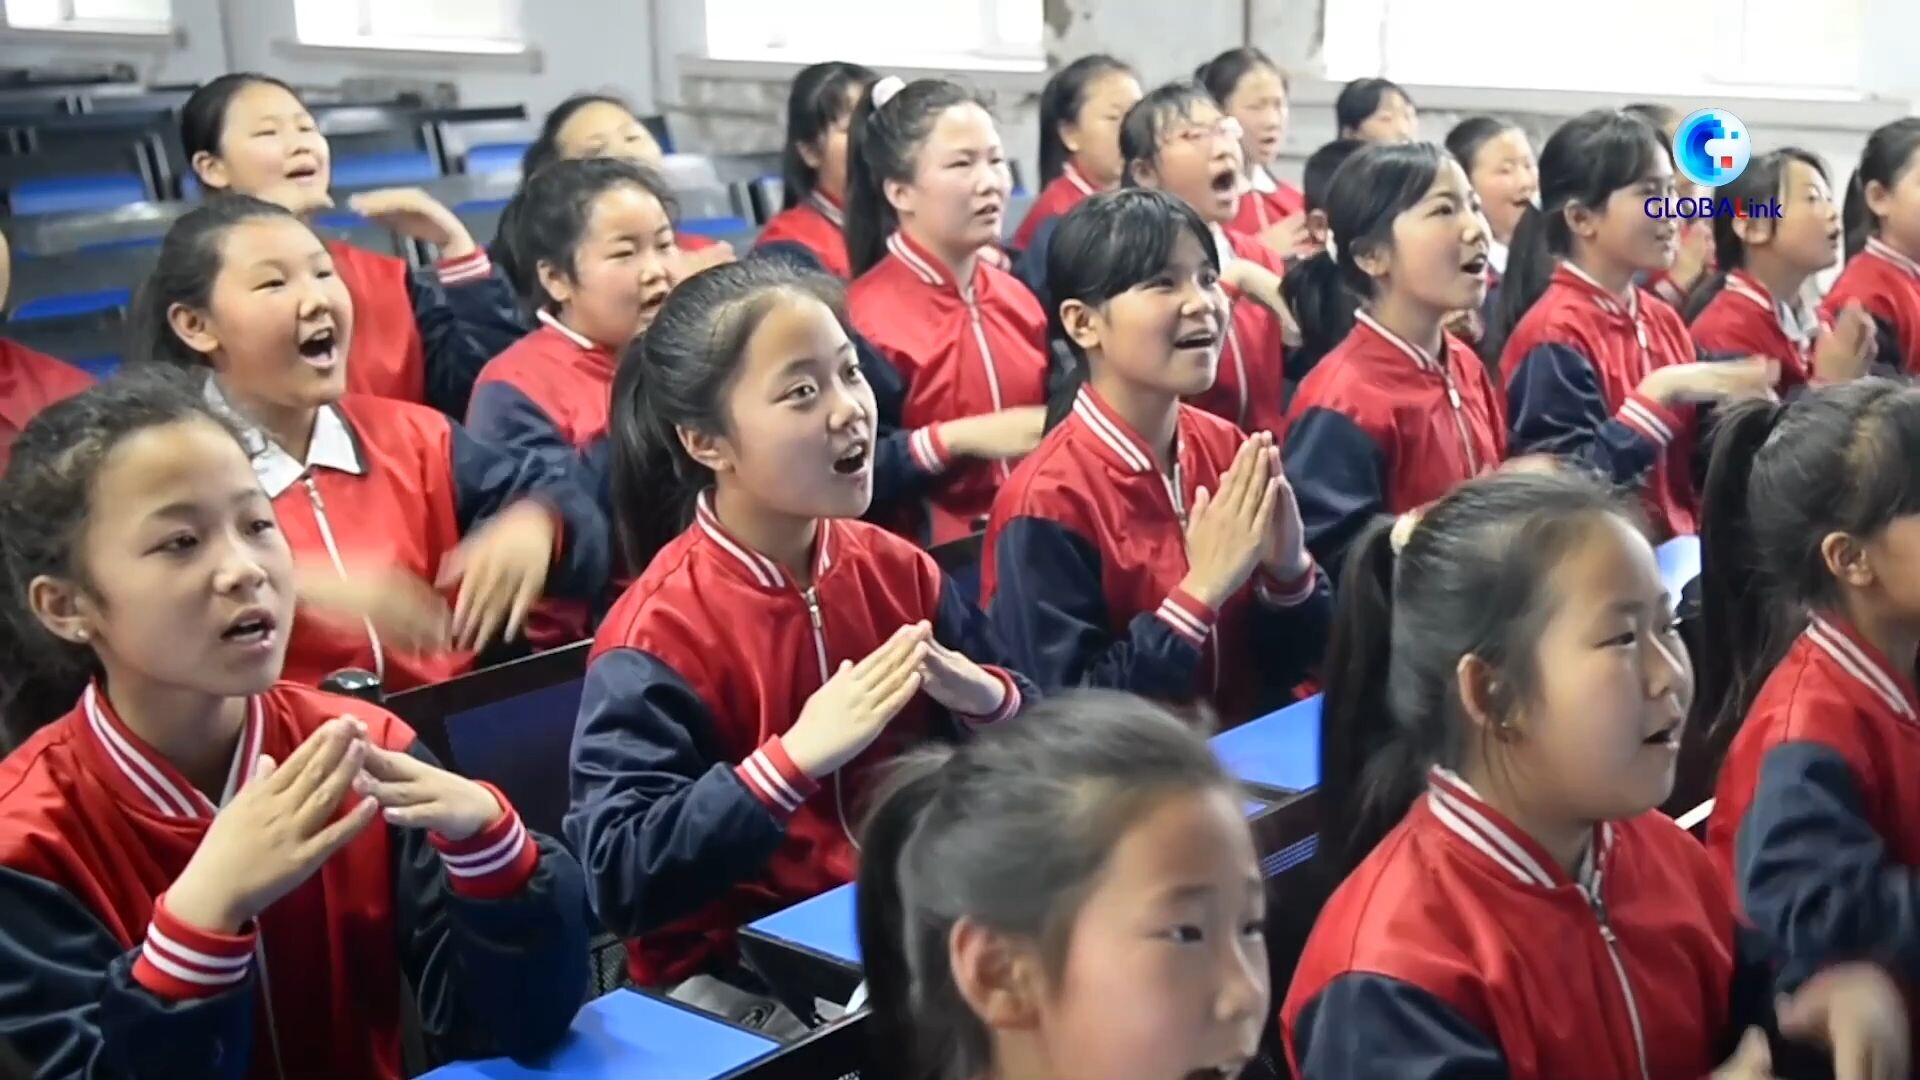 GLOBALink : ทีมคอรัสโรงเรียนประถมจีน ร้องดีคว้าไลค์โดนใจชาวเน็ต